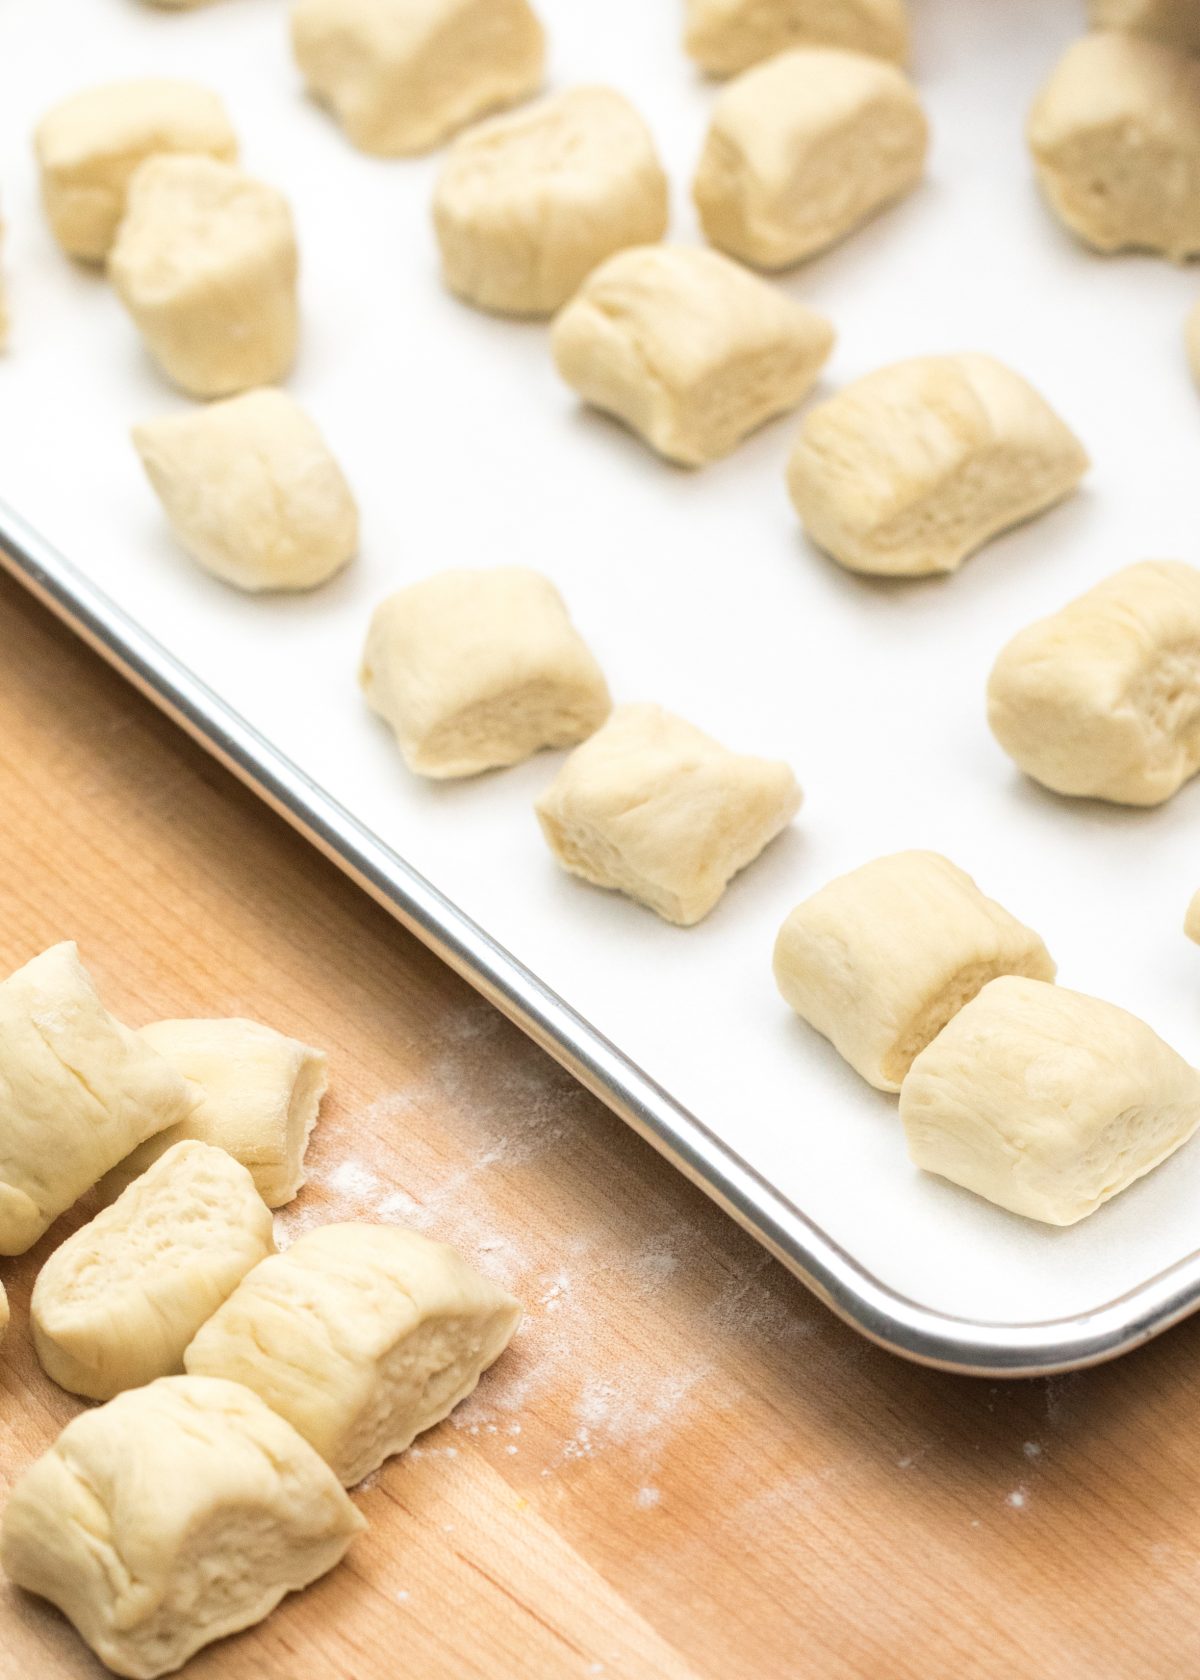 Place bite size dough pieces onto baking sheet